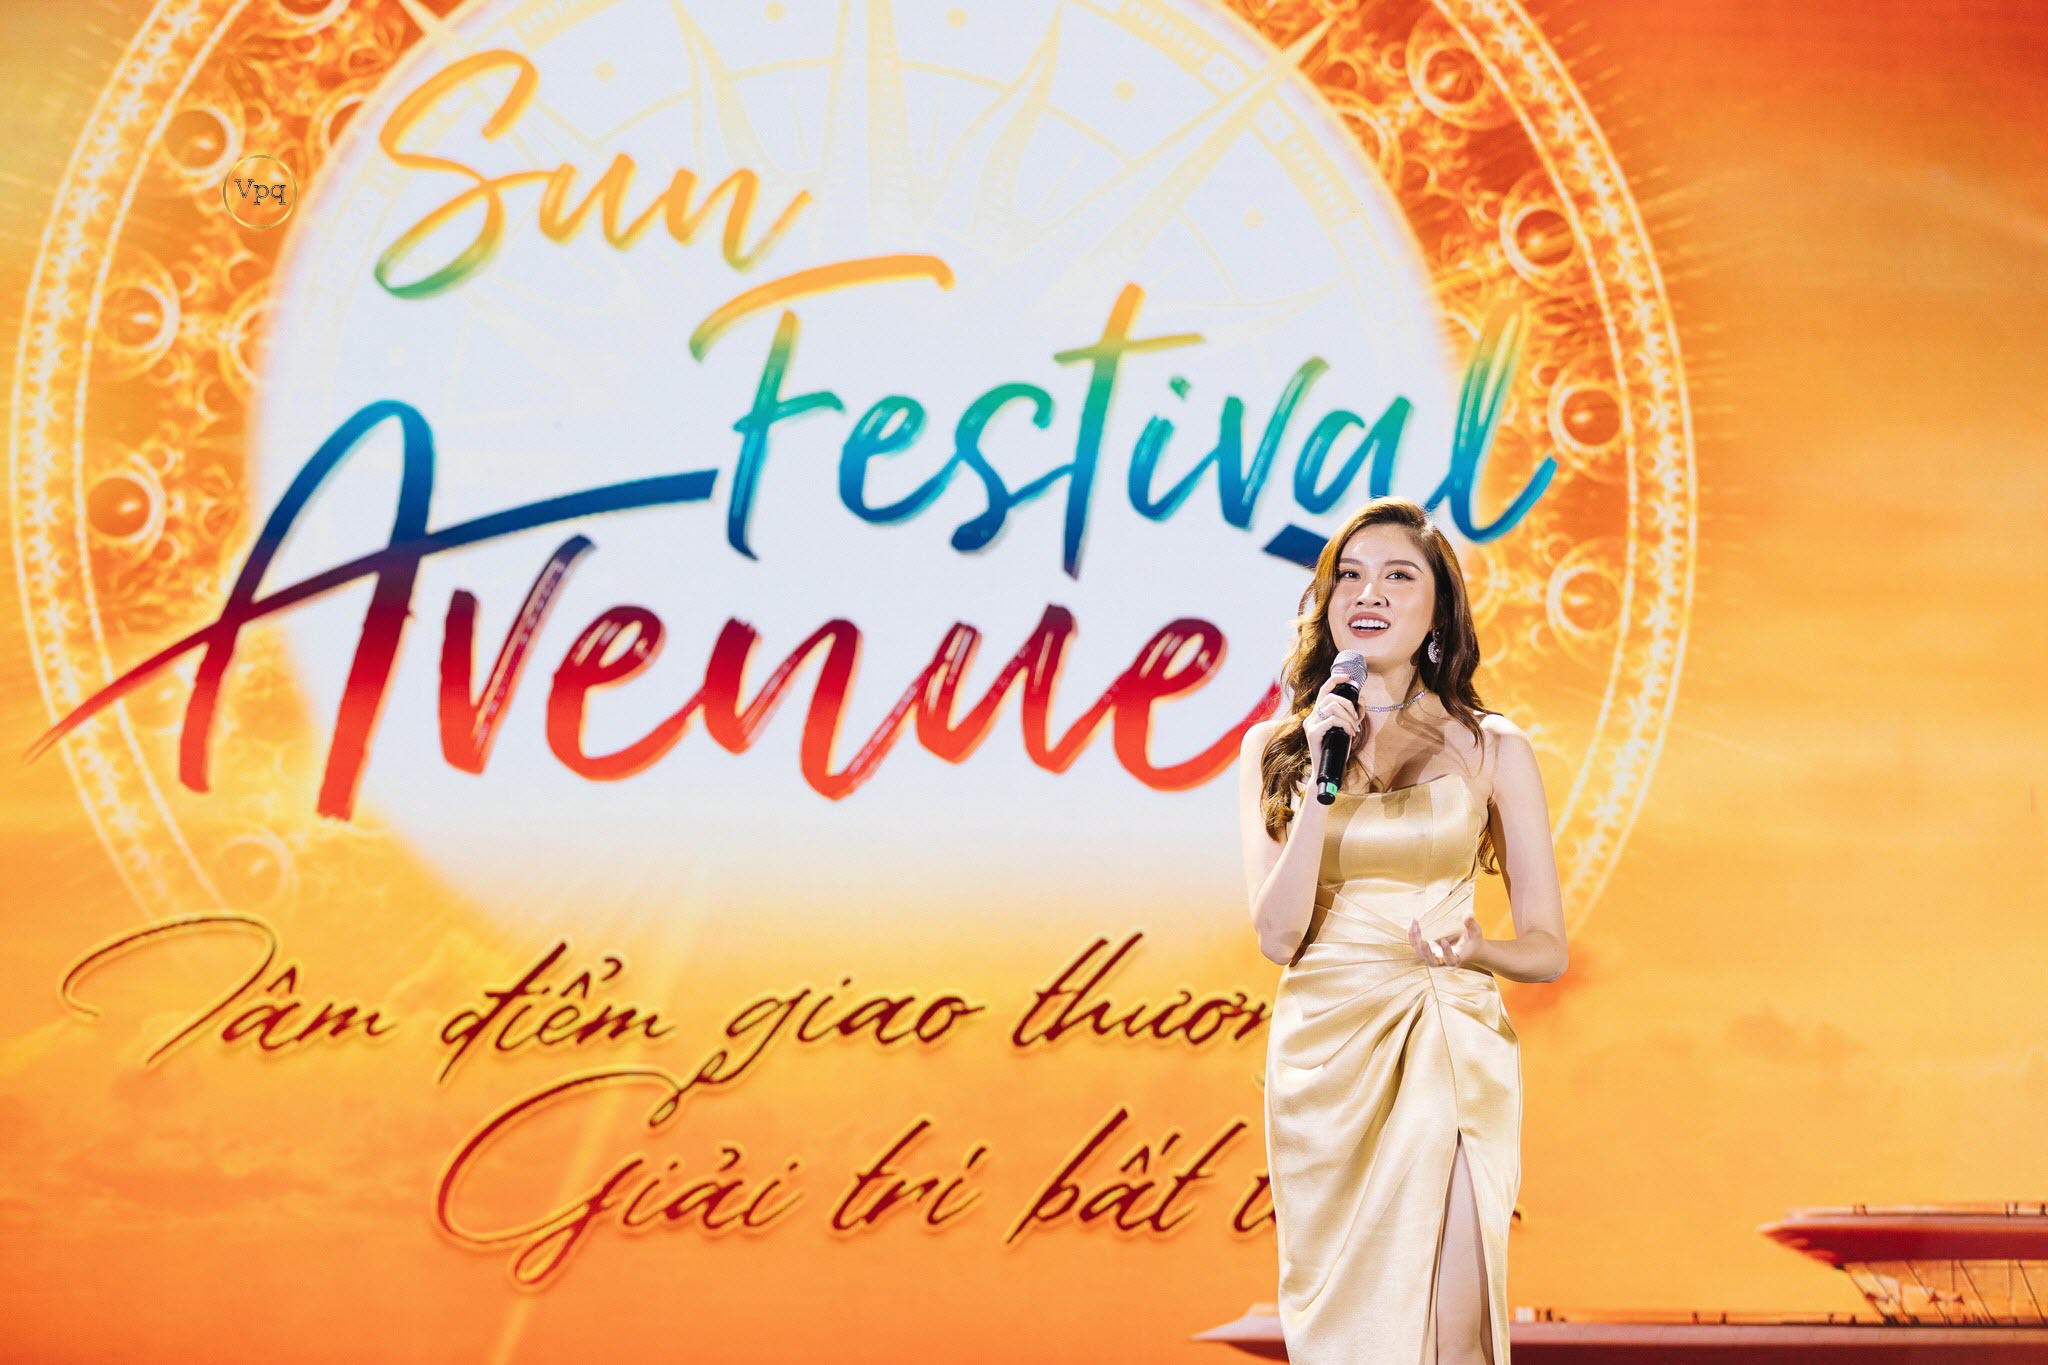 Sun Festival Avenue -Tâm điểm giải trí giao thương bất tận